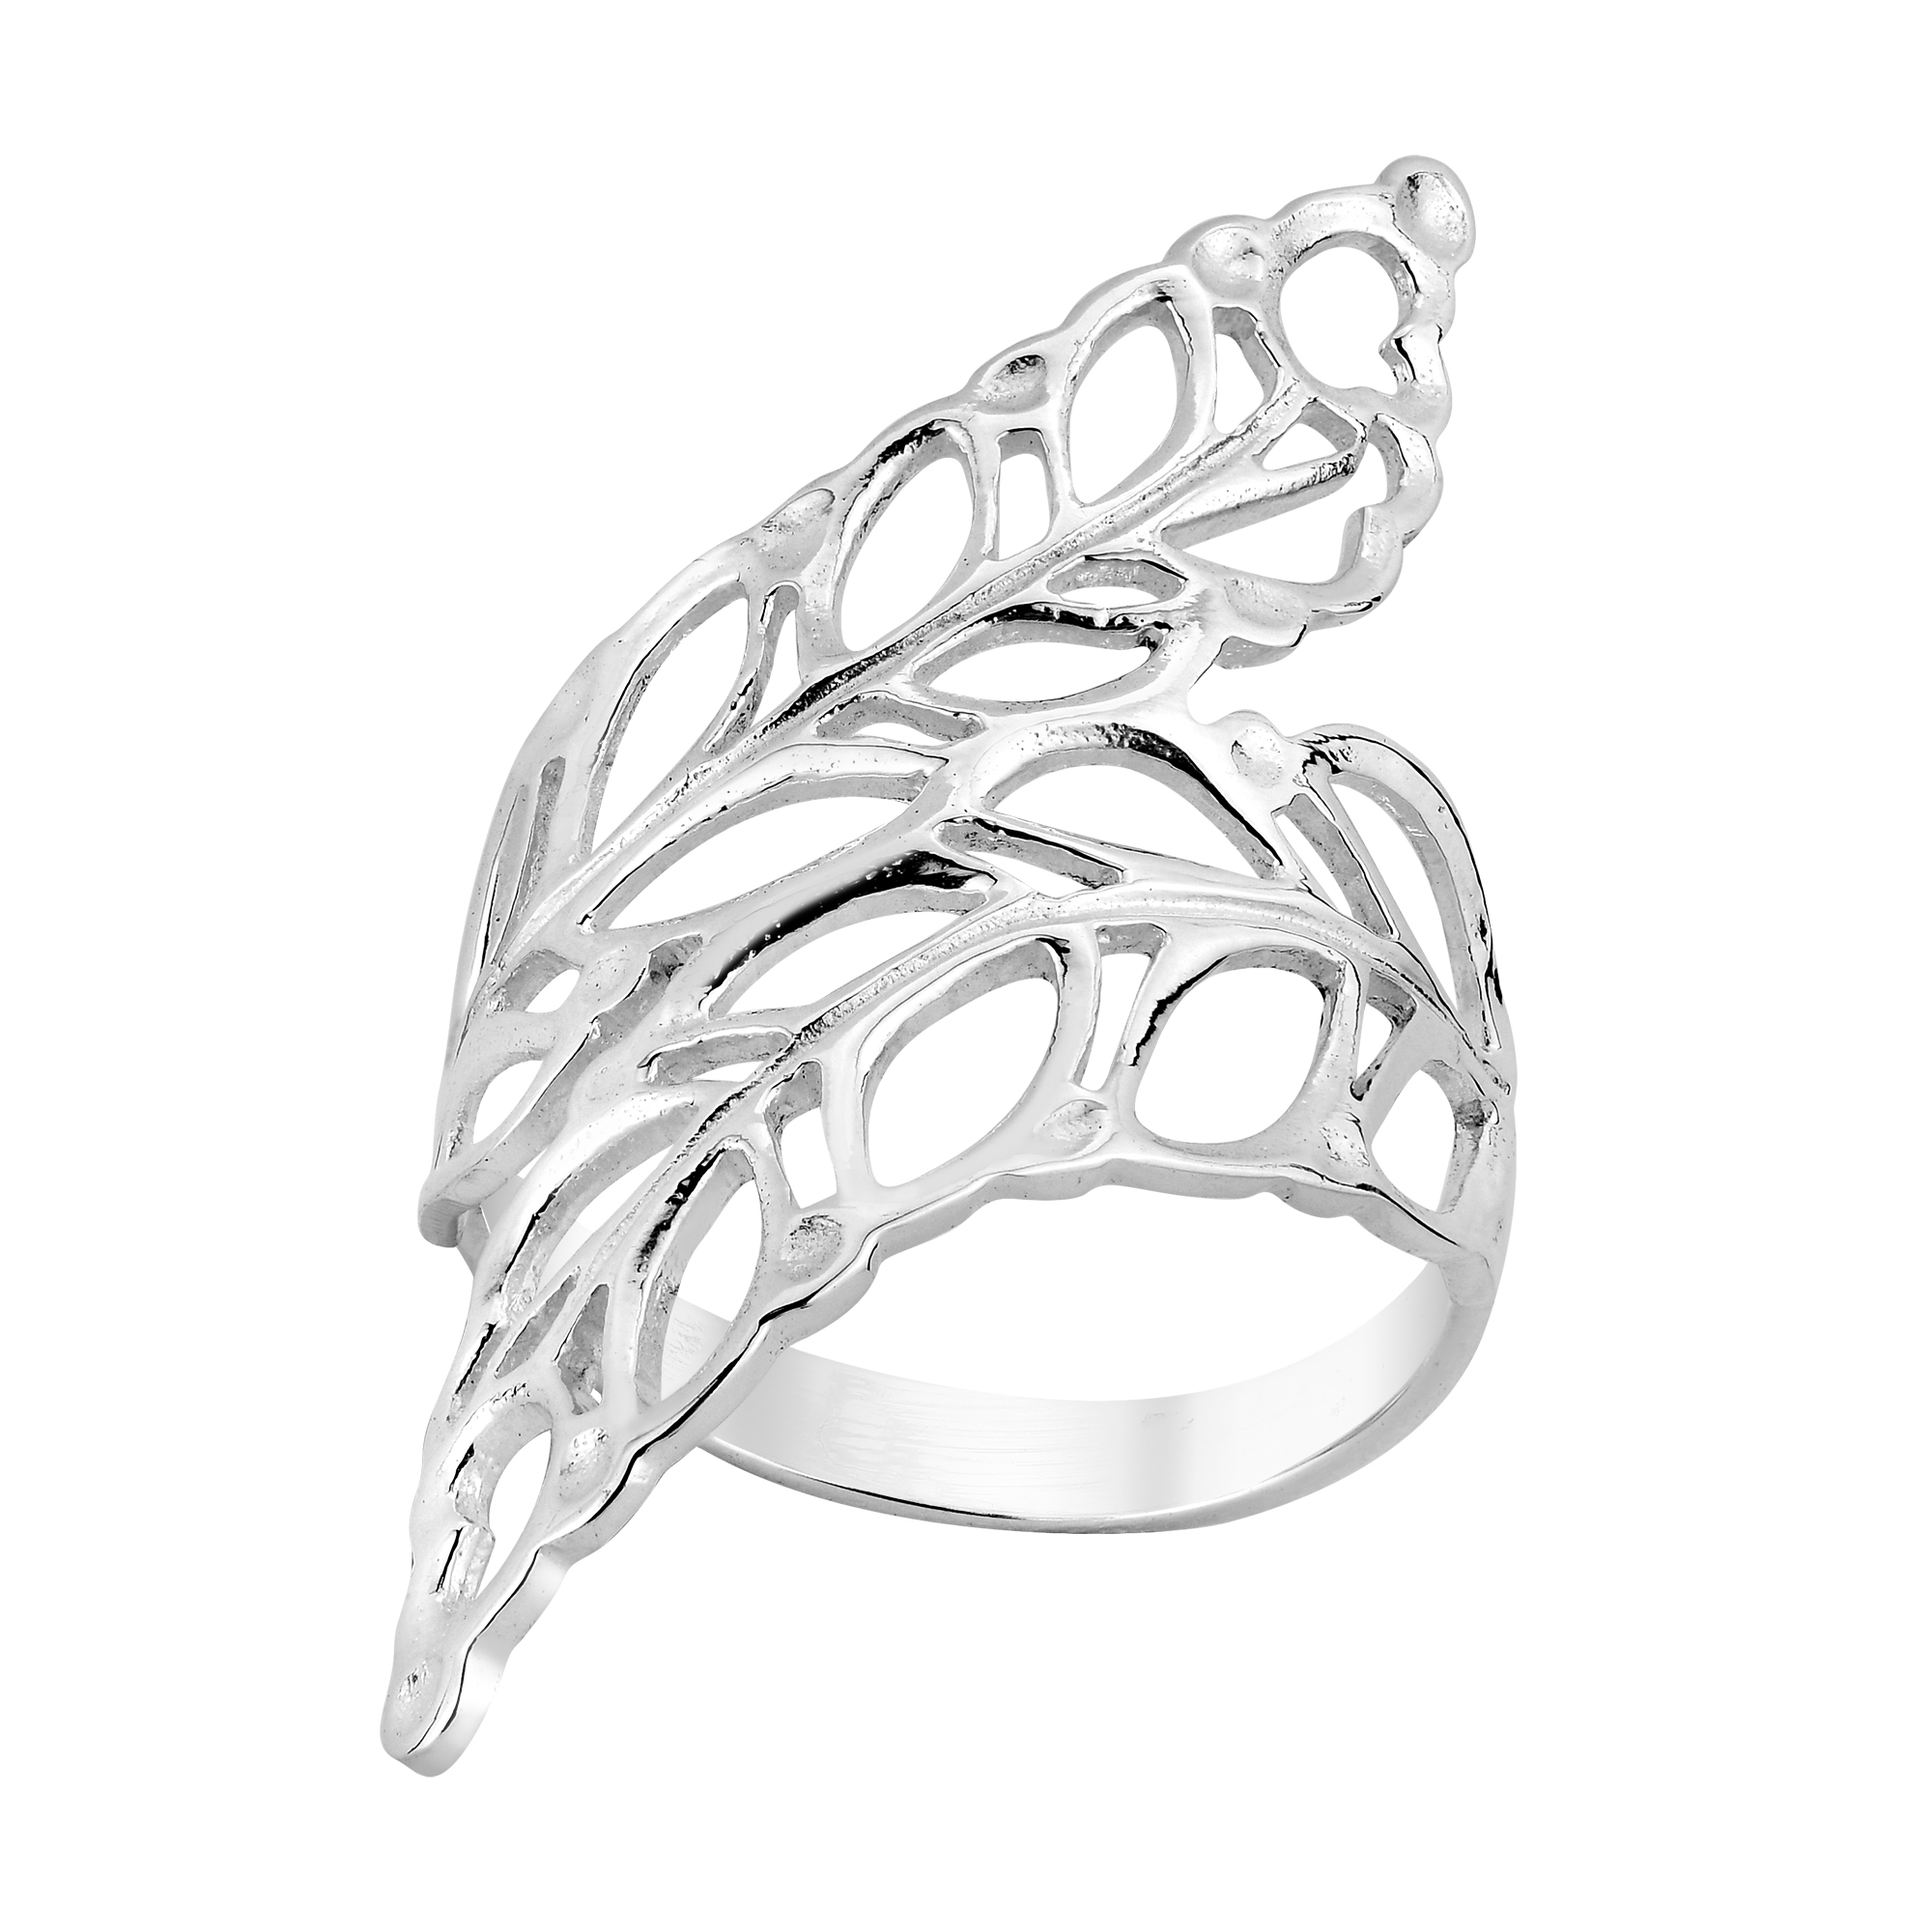 Leaf crystal wrap sterling silver ring